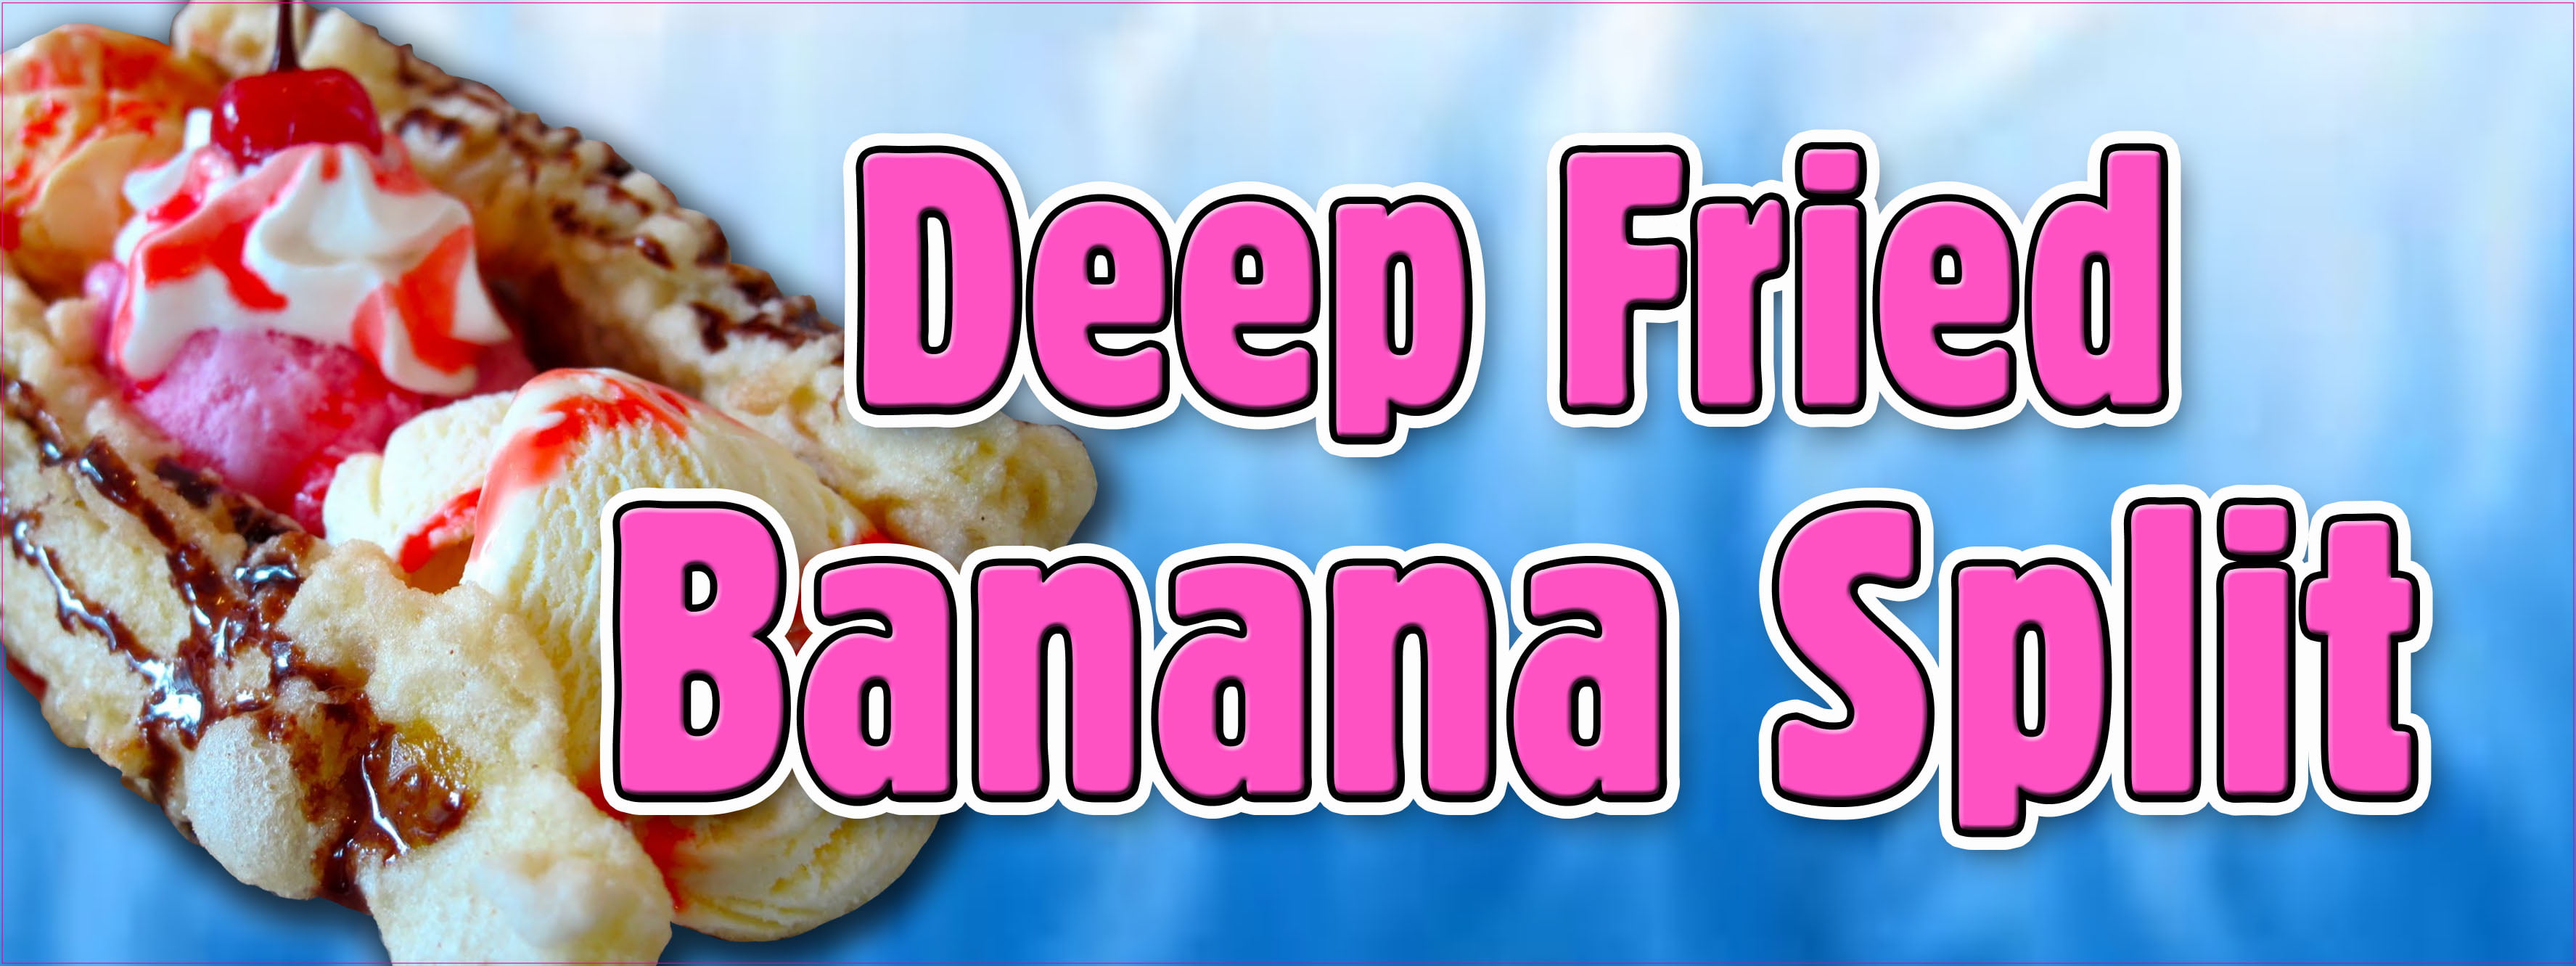 Banana Split Concession Restaurant Food Truck Die-Cut Vinyl Sticker